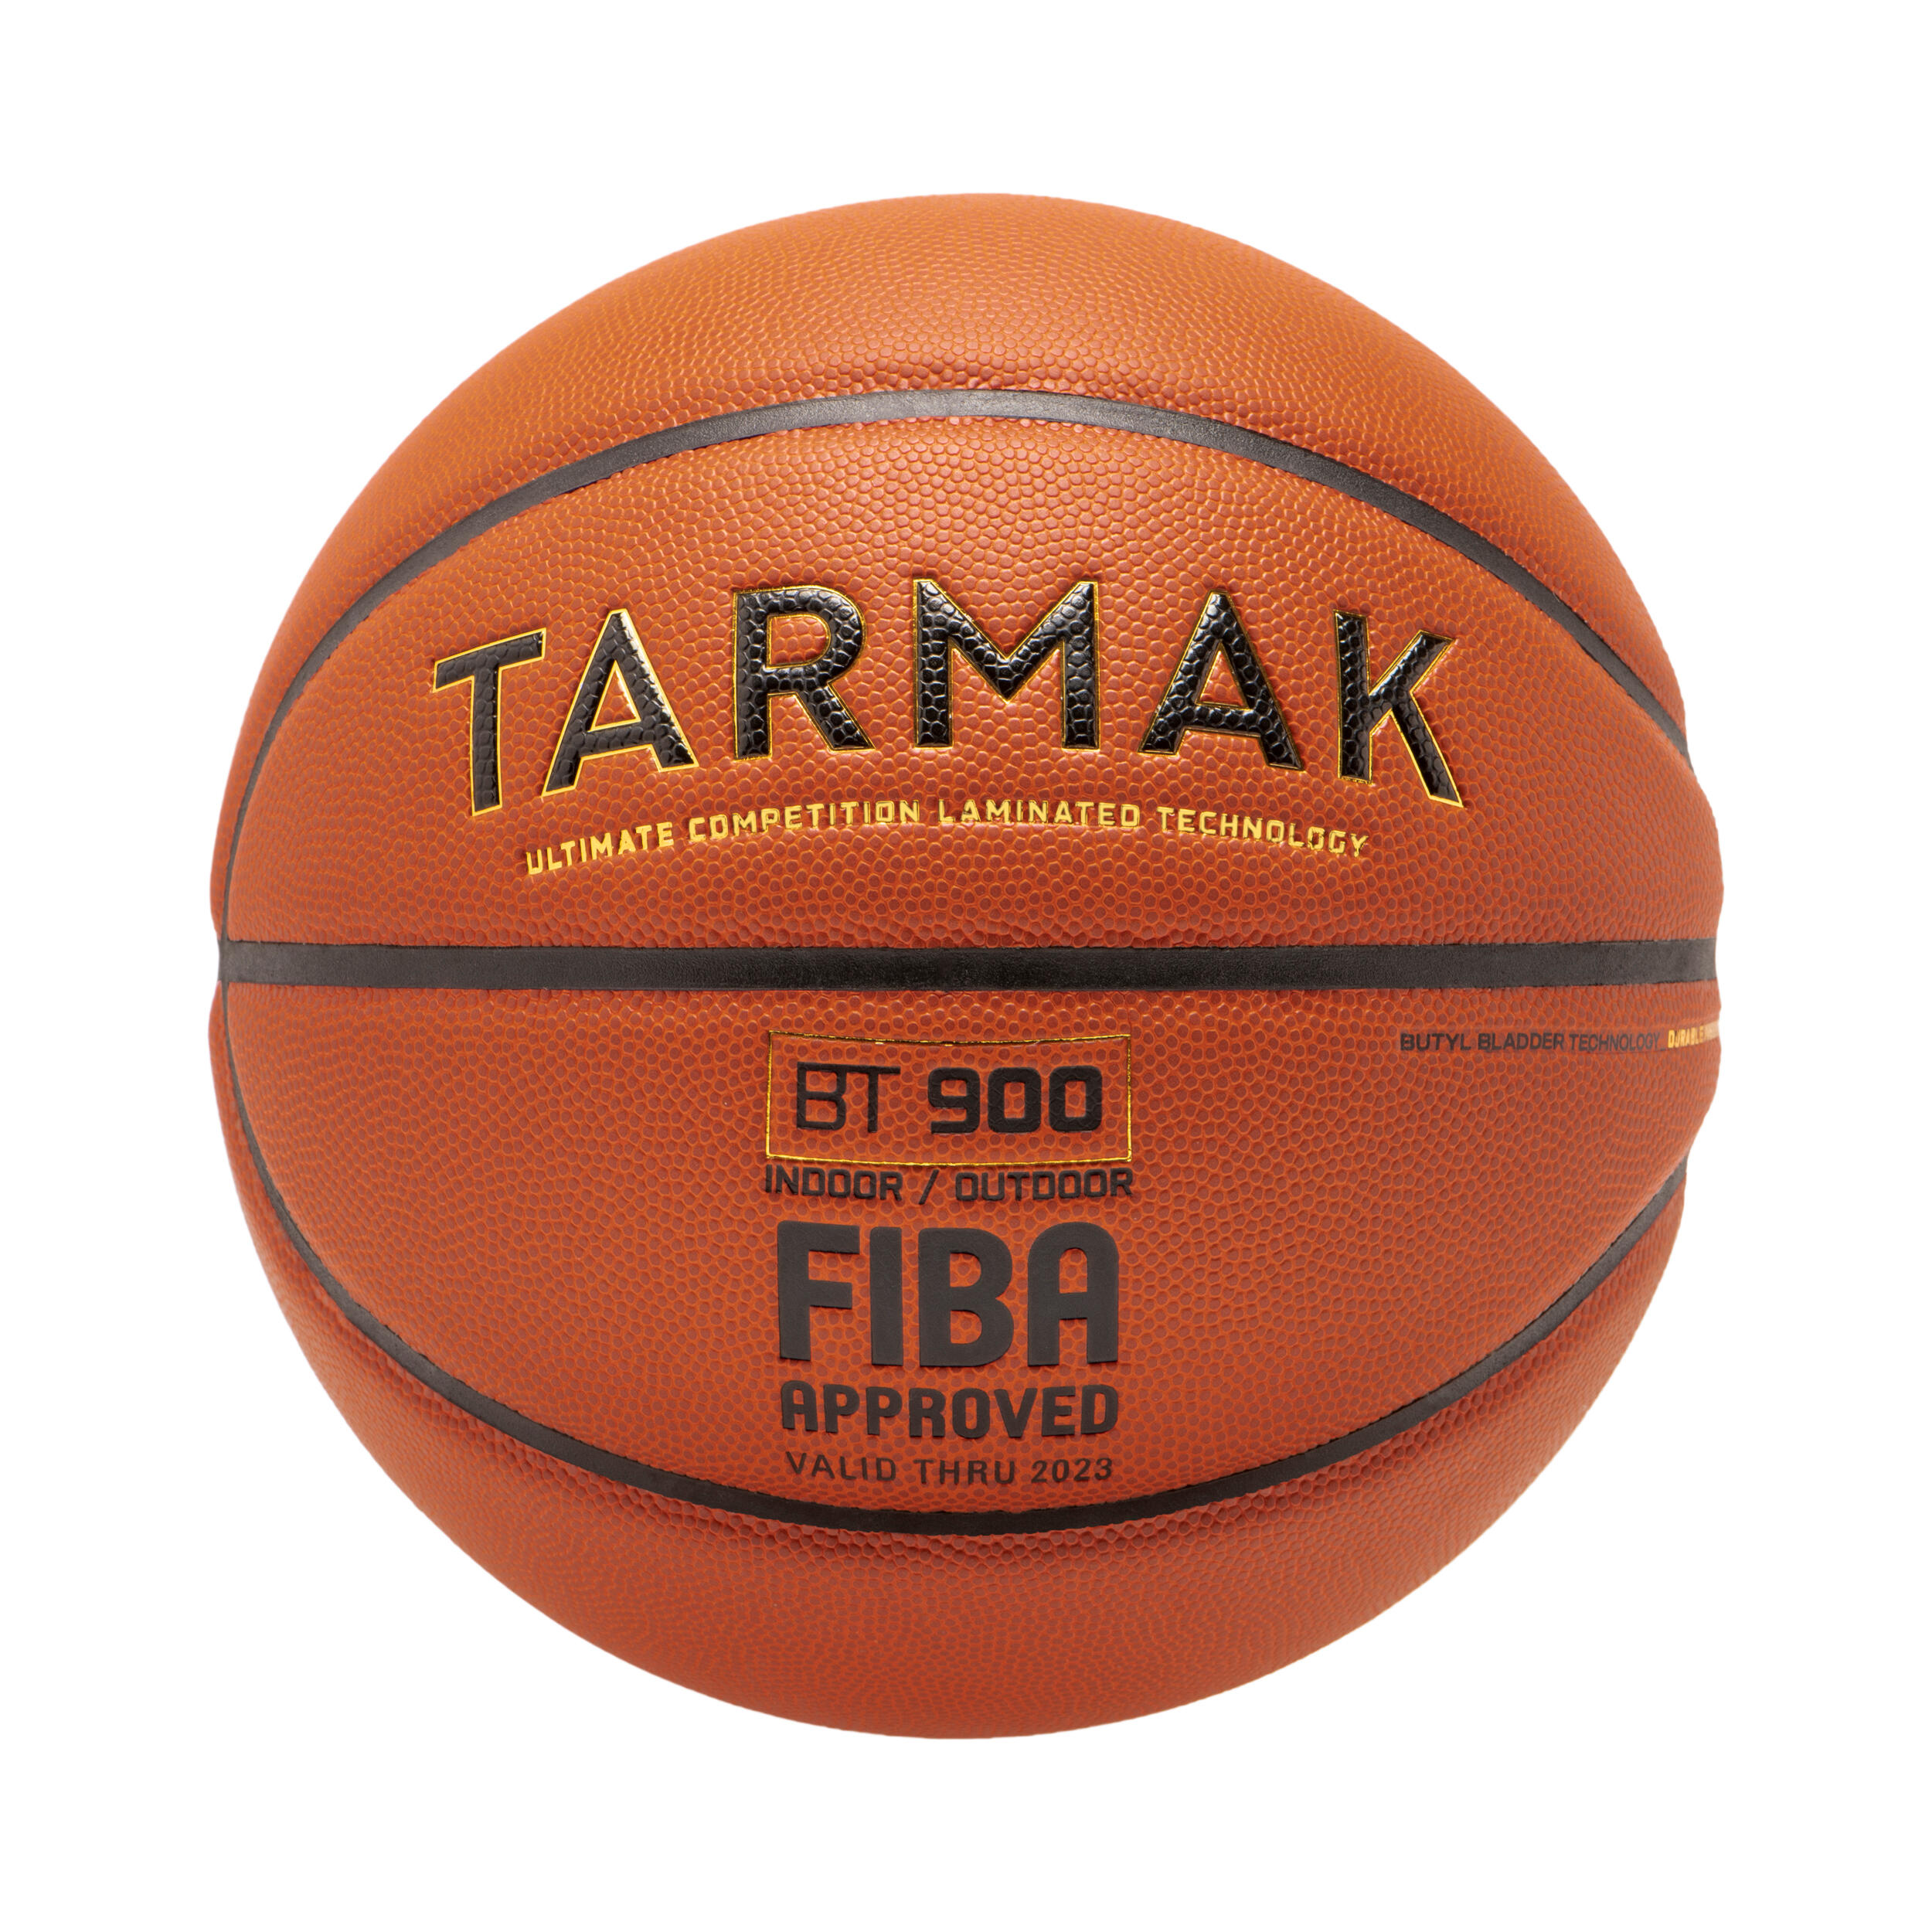 TARMAK Ballon De Basket Bt900 Taille 6, Homologu&#xE9; Fiba Pour Fille, Gar&#xE7;on Et Femme -